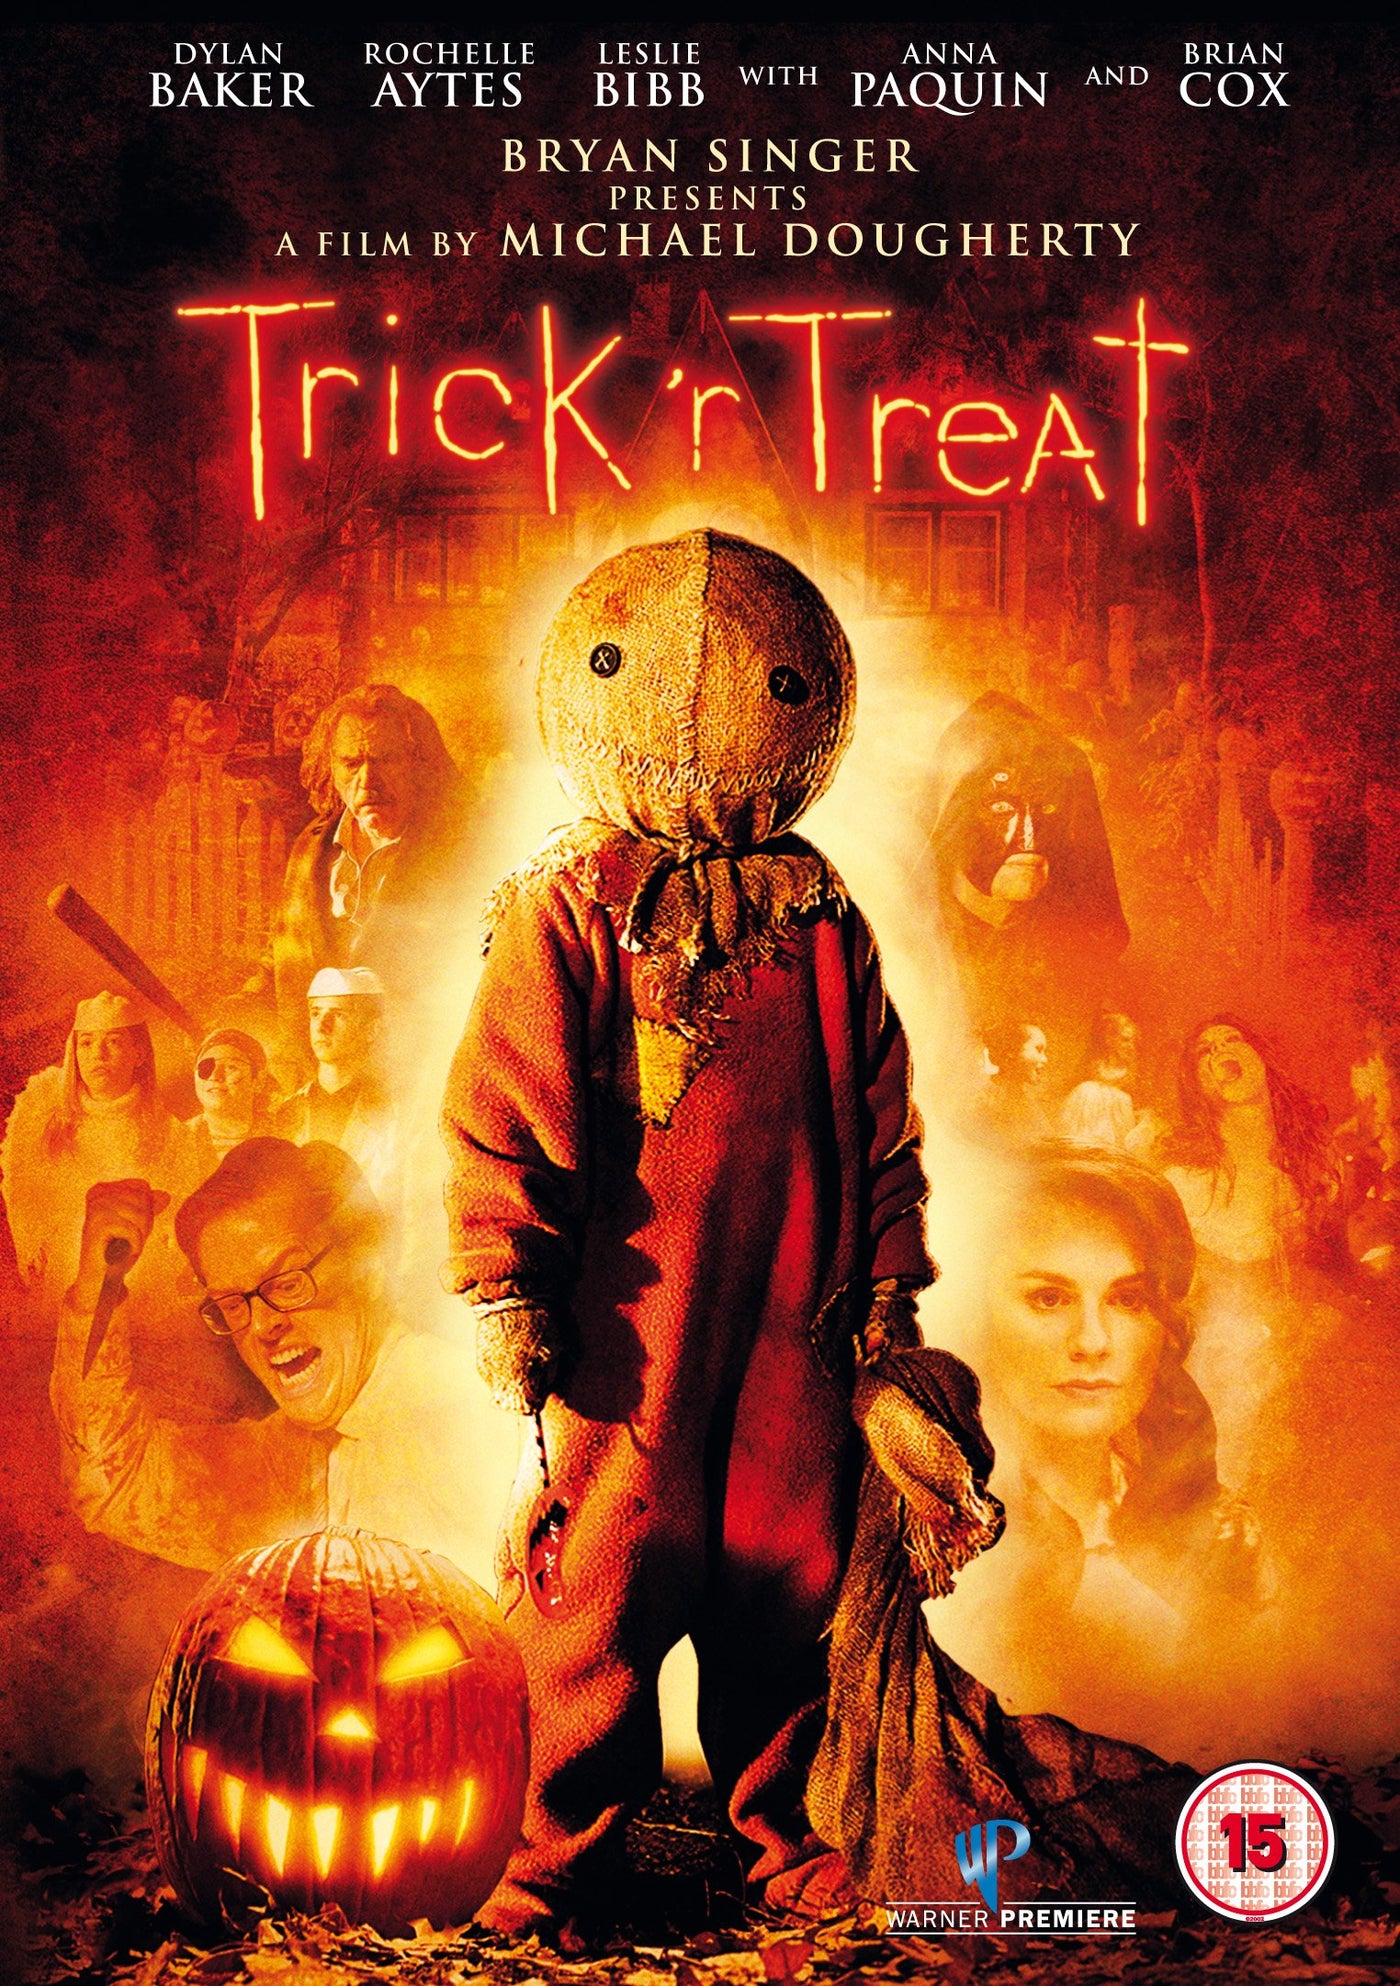 Trick 'r Treat [2007] (DVD)